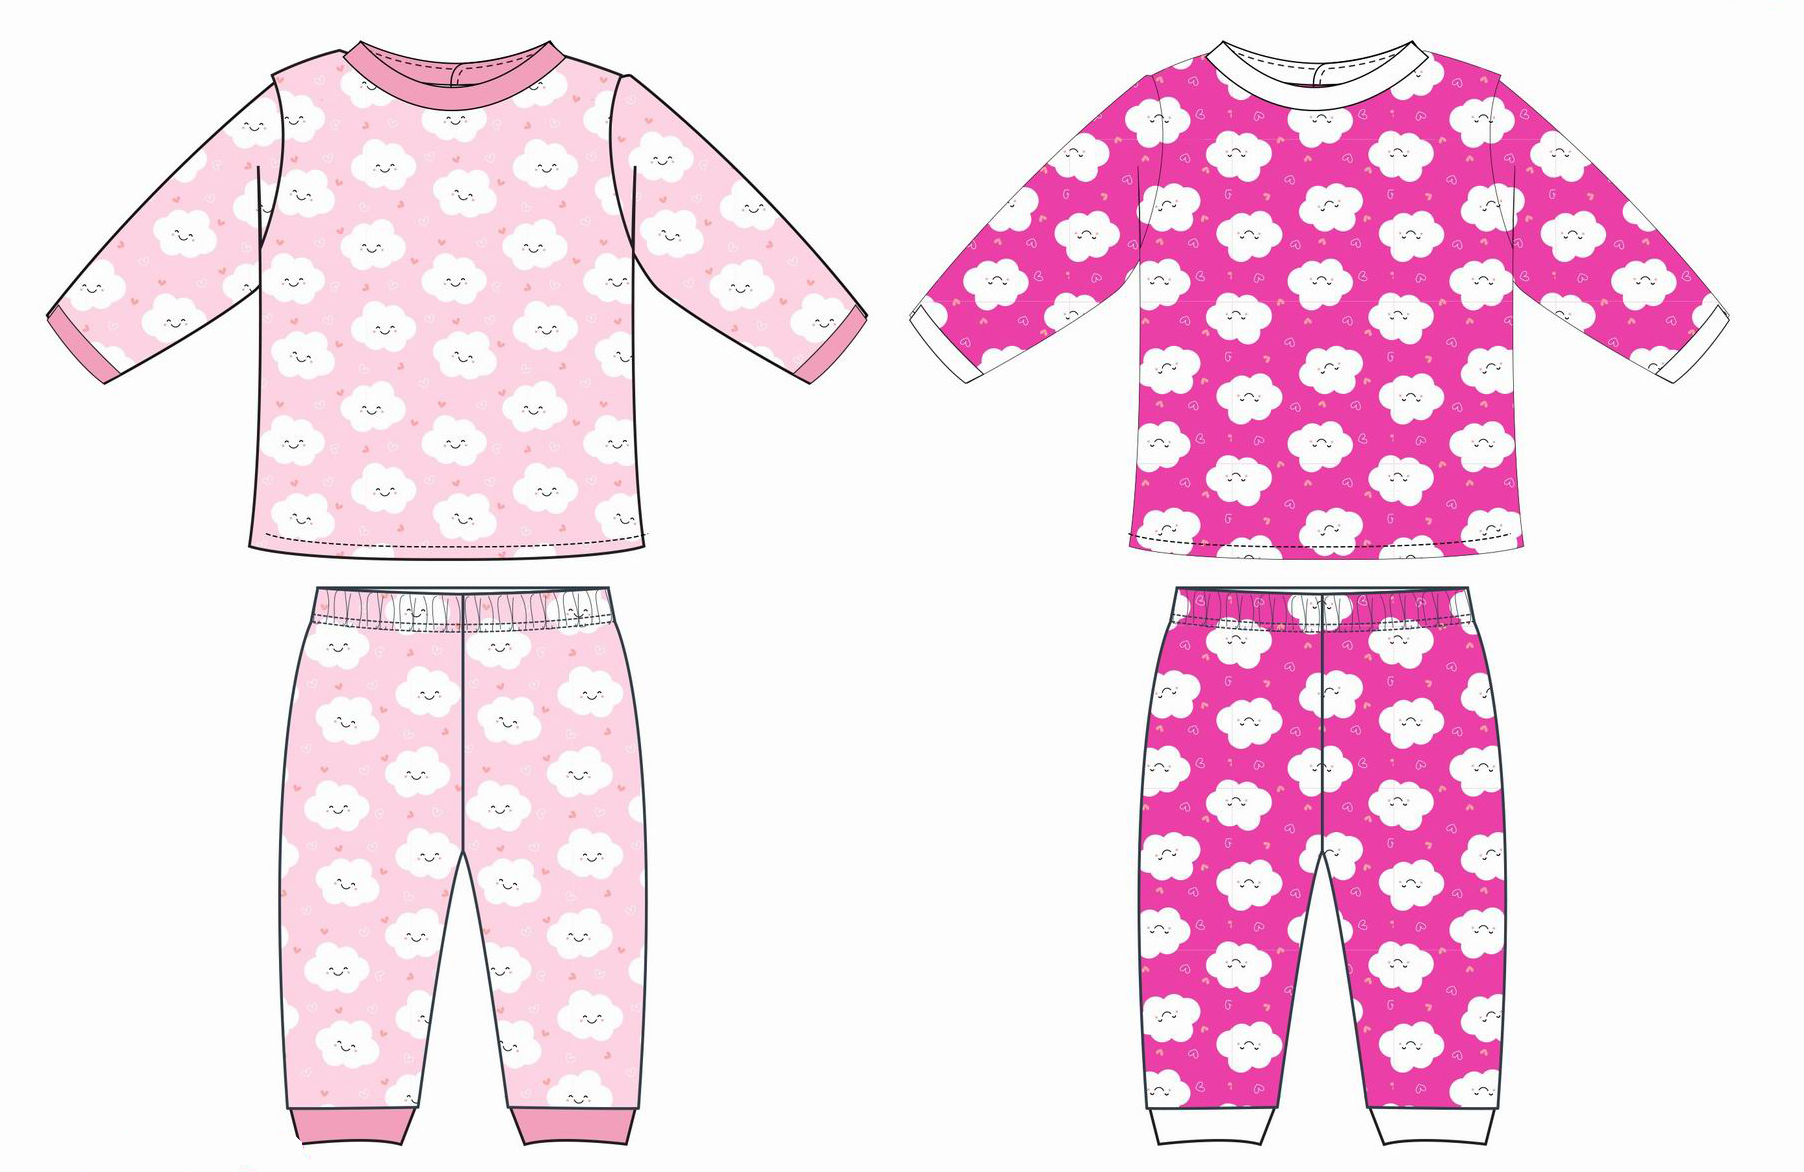 Toddler Girl's 2 PC. Long-Sleeve Rib PAJAMAS Sets w/ Bedtime Cloud Print - Sizes 2T-4T